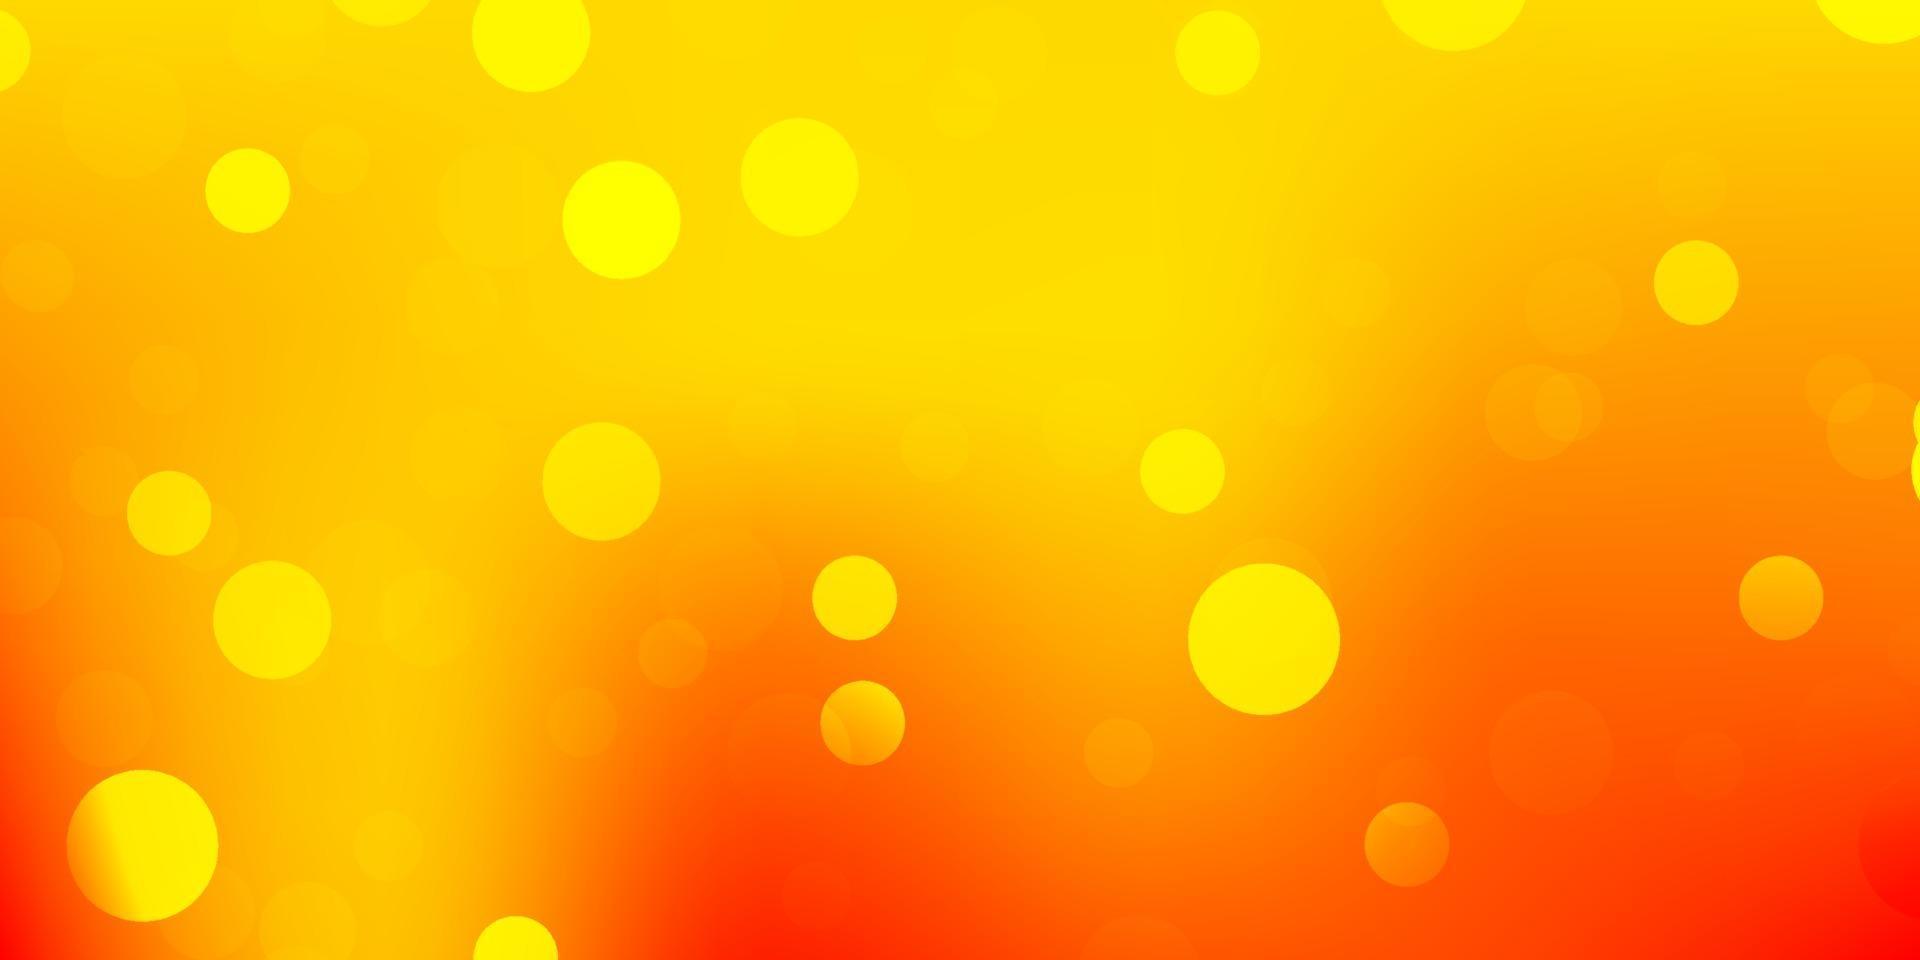 Light orange vector texture with memphis shapes.